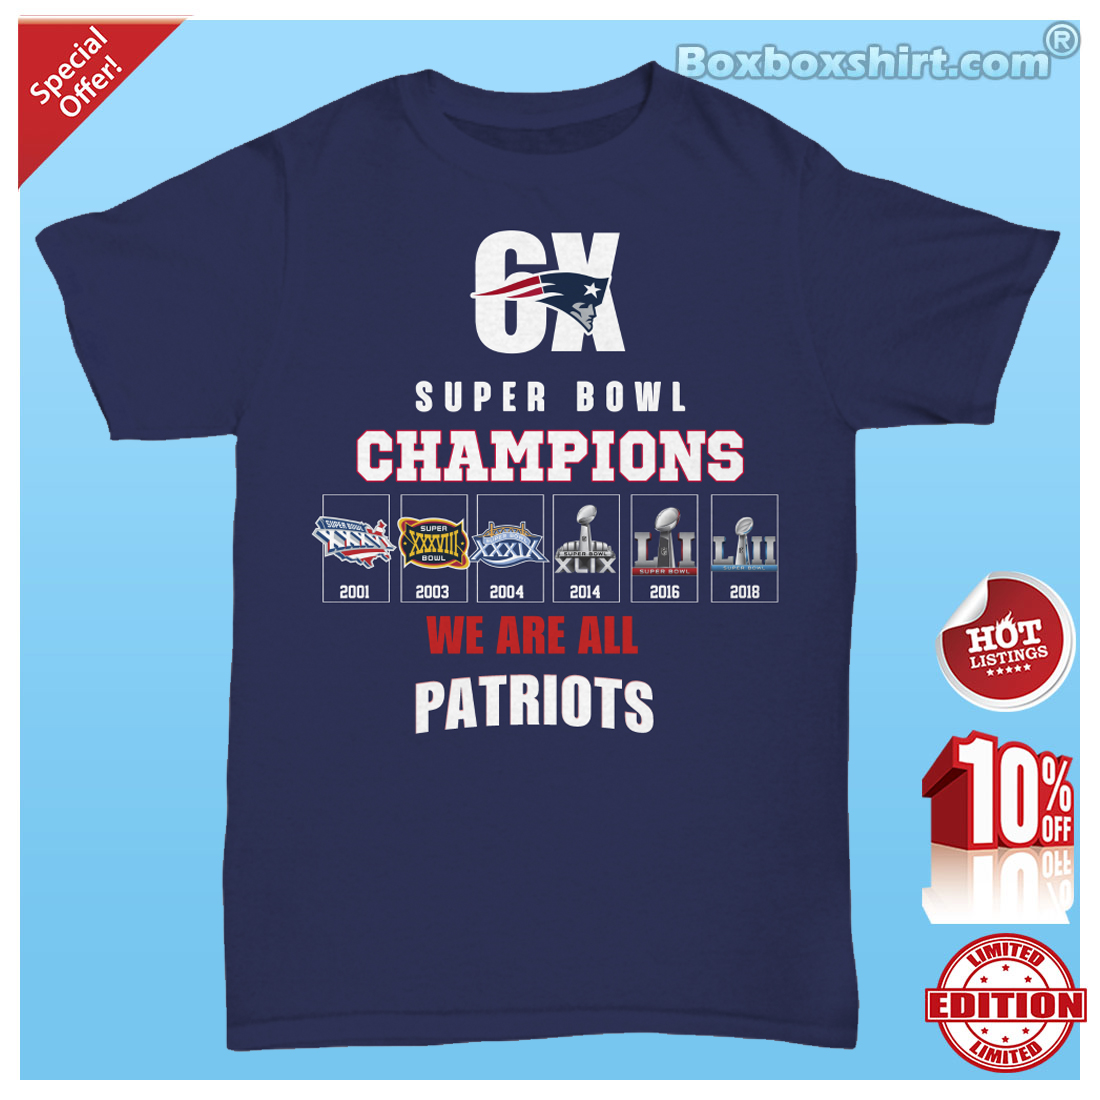 6x super bowl champions we are all Patriots t shirt